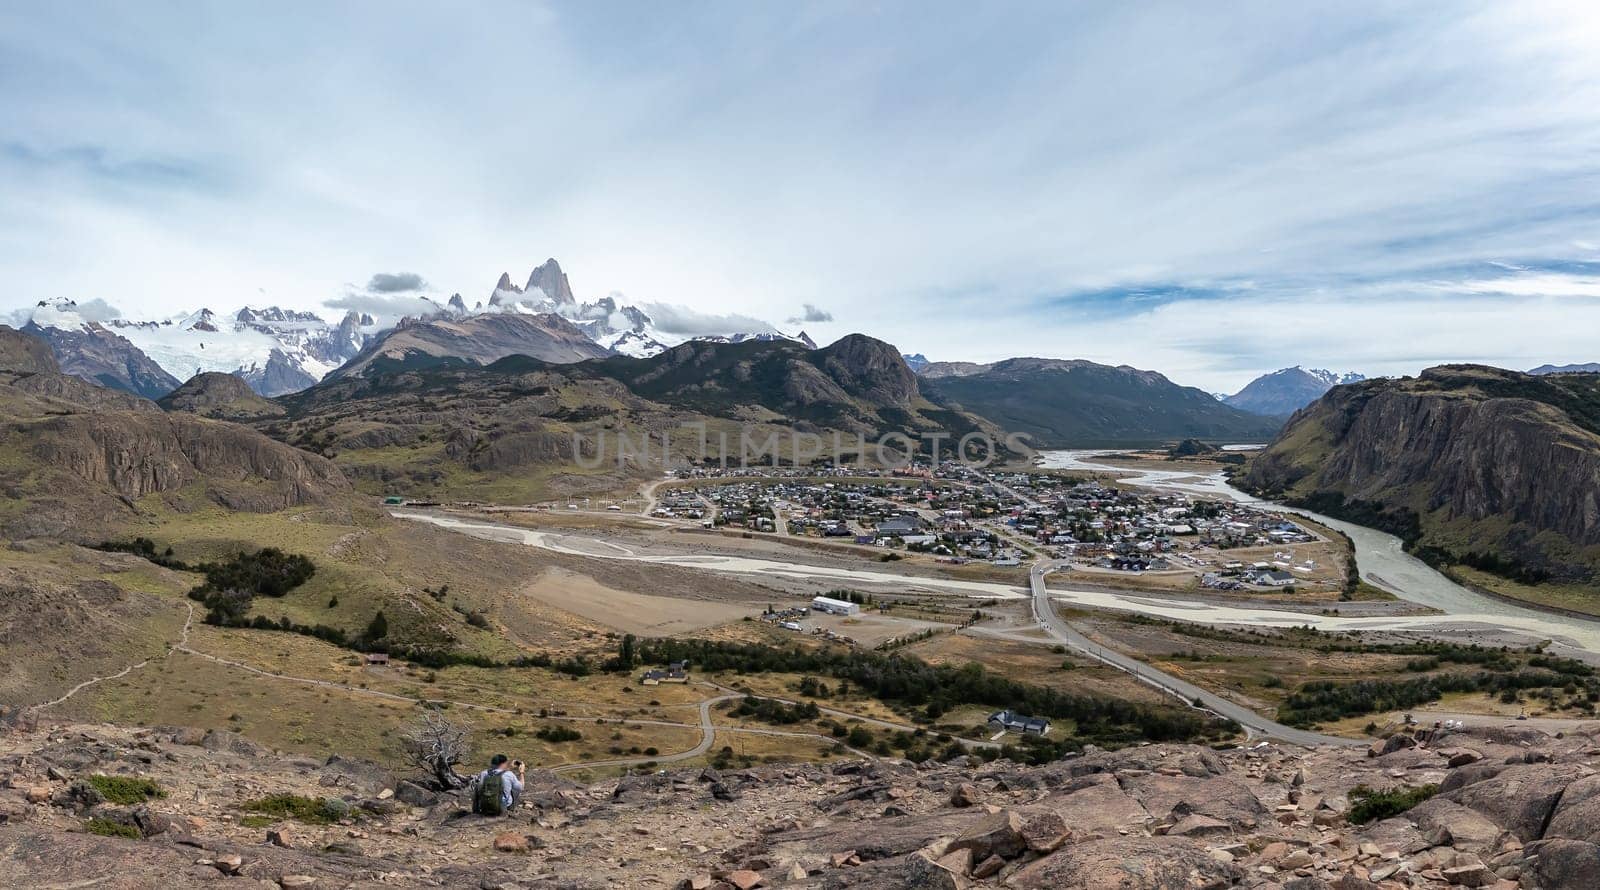 Majestic Fitz Roy Massif and Cerro Torres Peaks in Patagonia with El chalten village